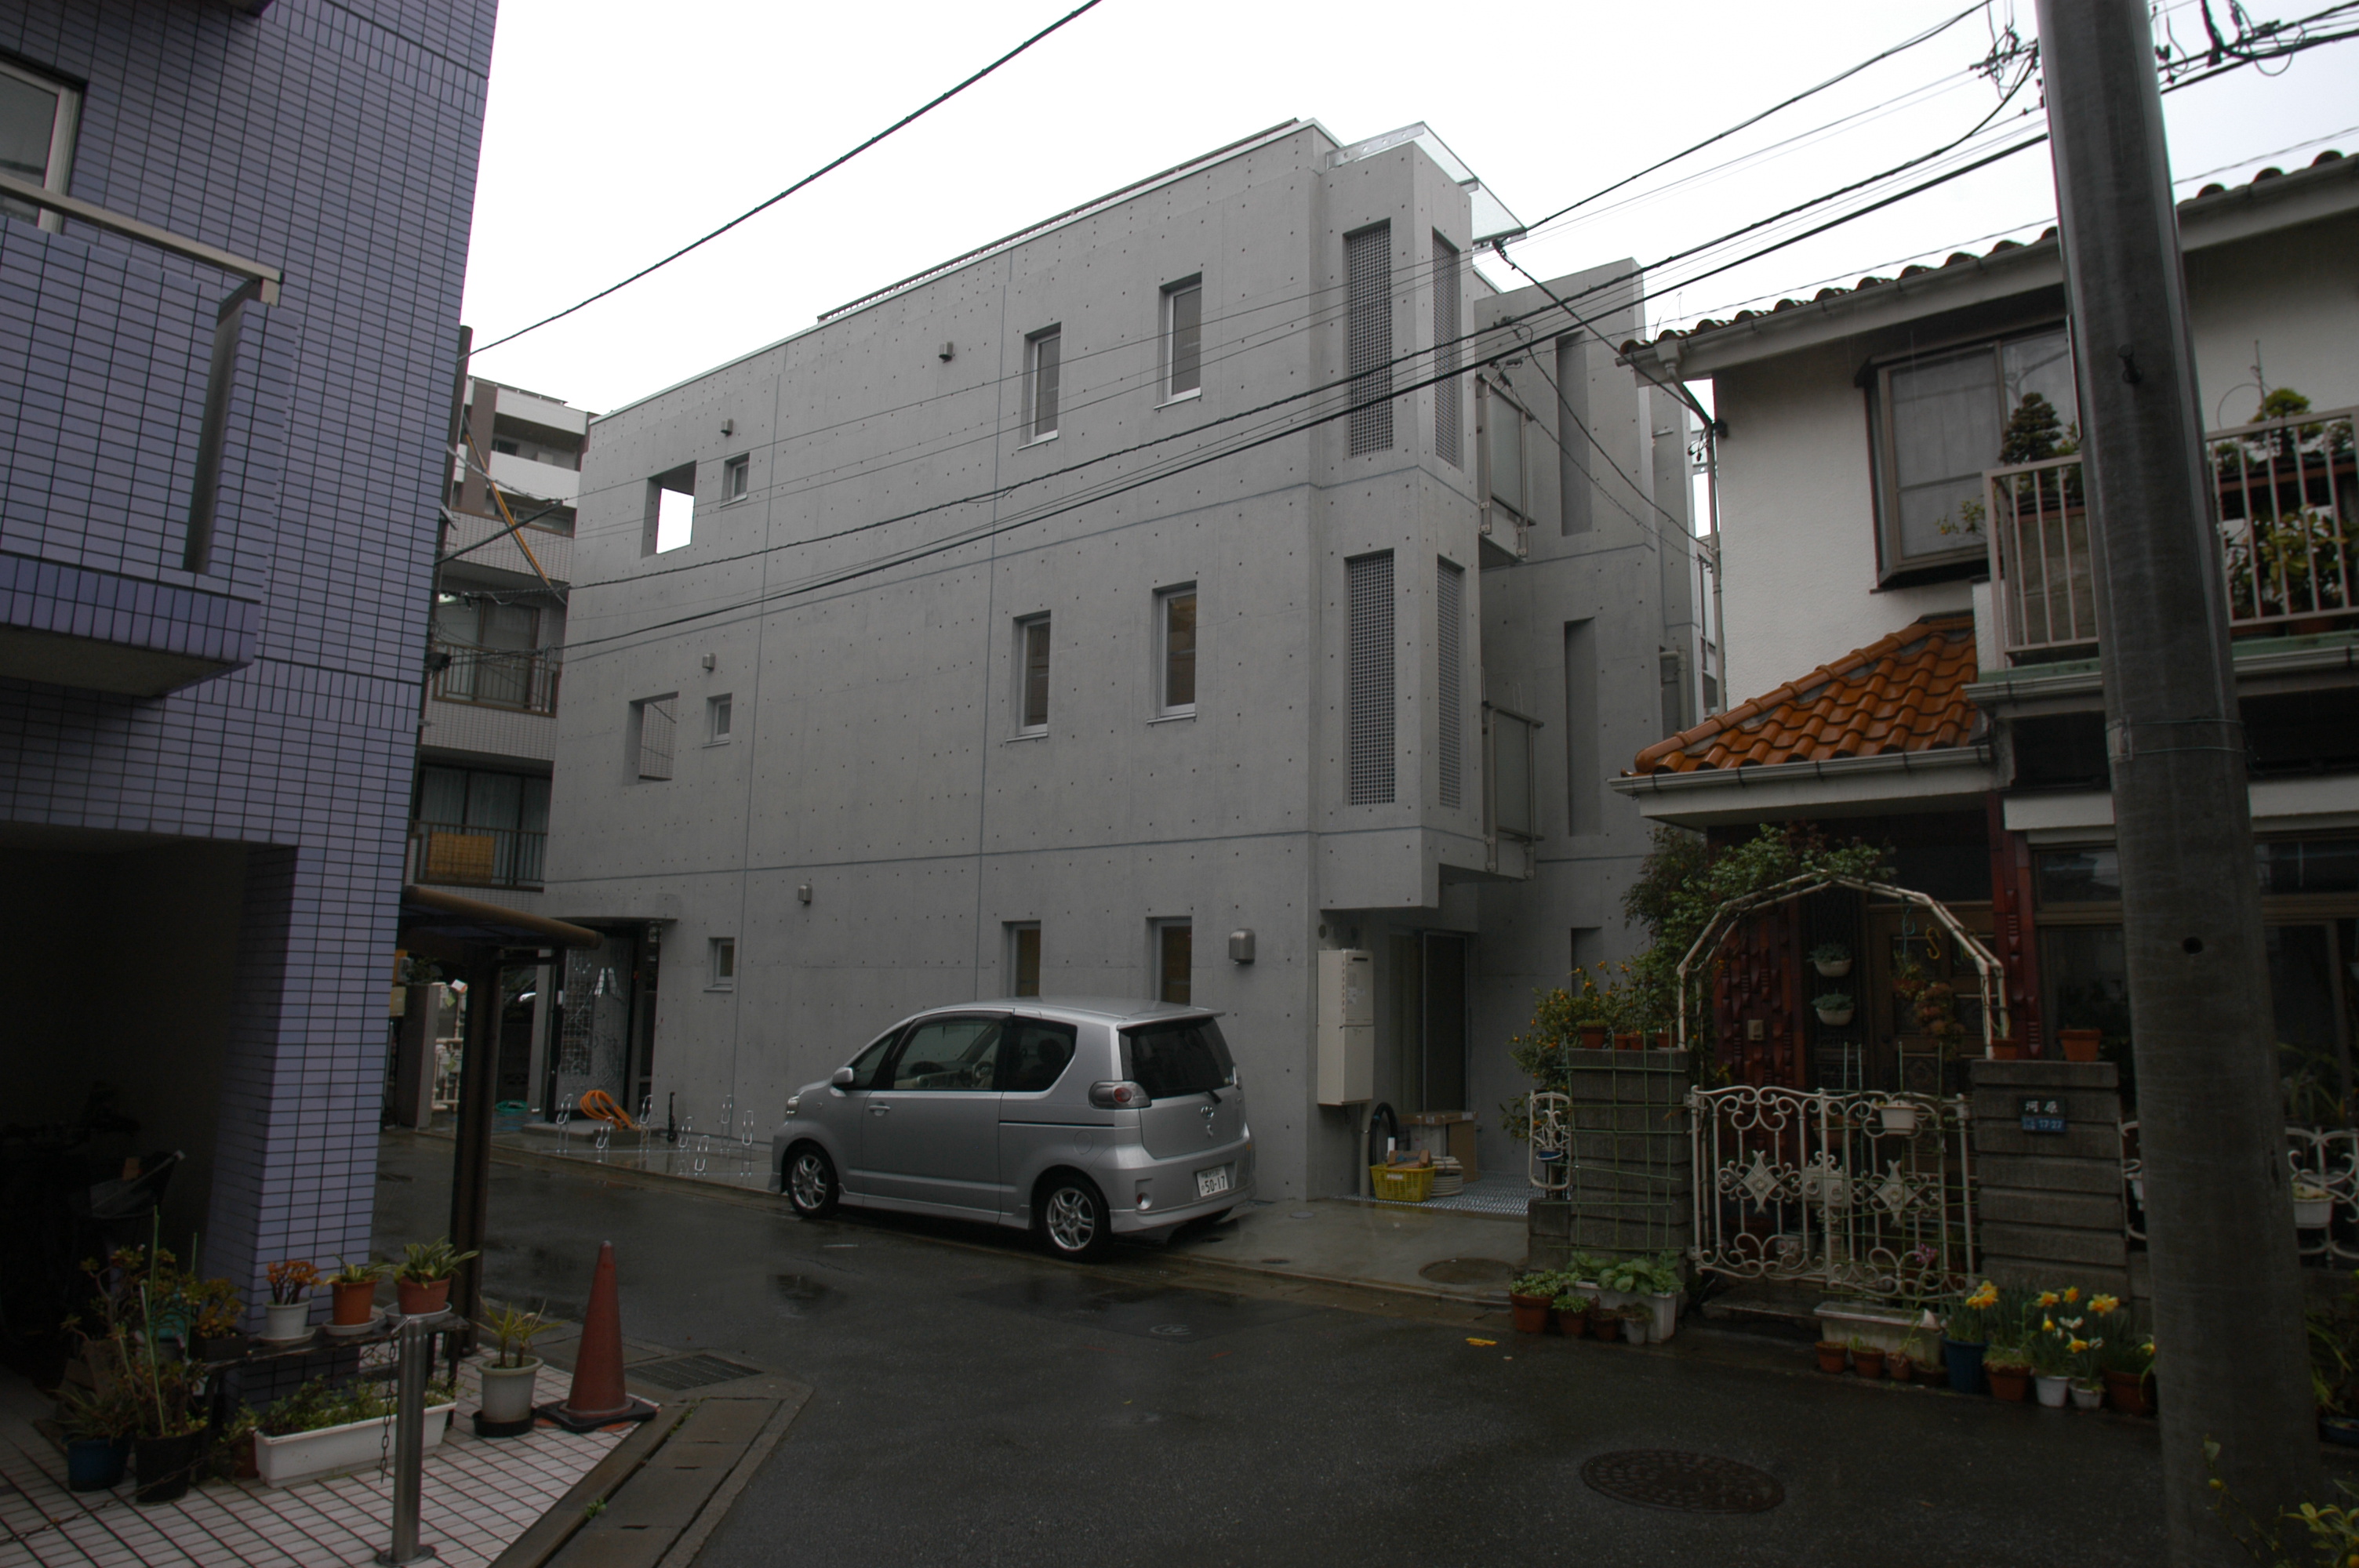 石川邸 / Ishikawa Tei